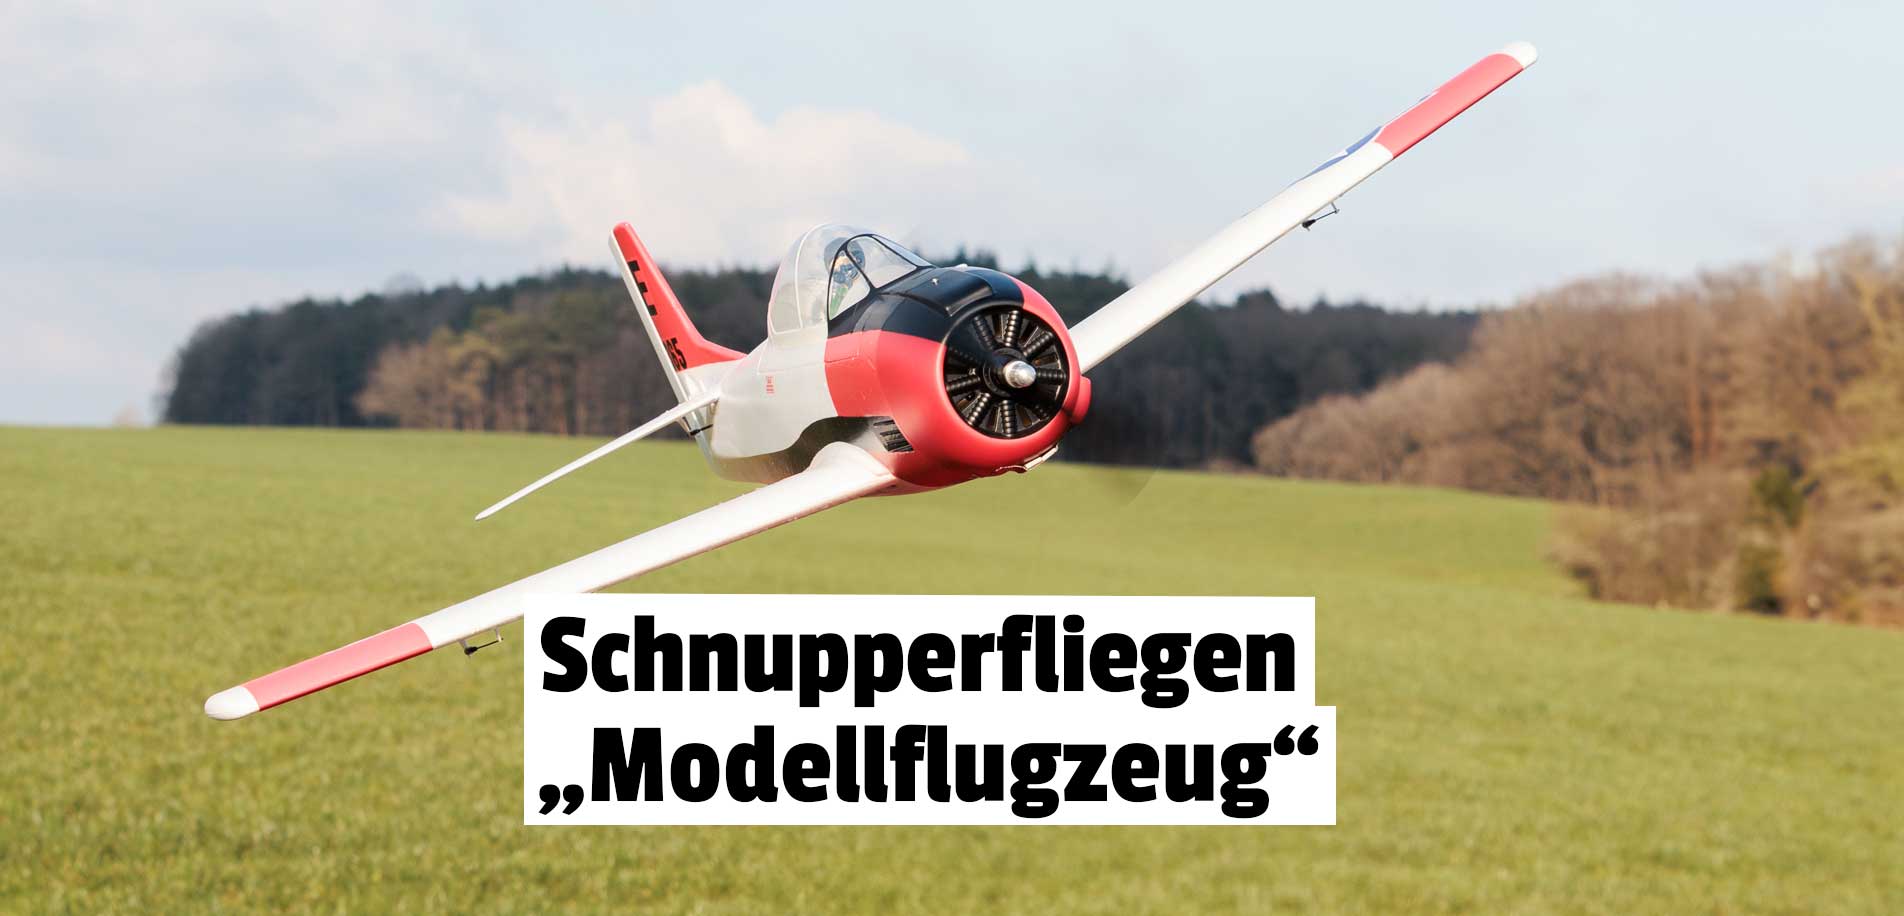 Modellflugzeug Schnupperfliegen